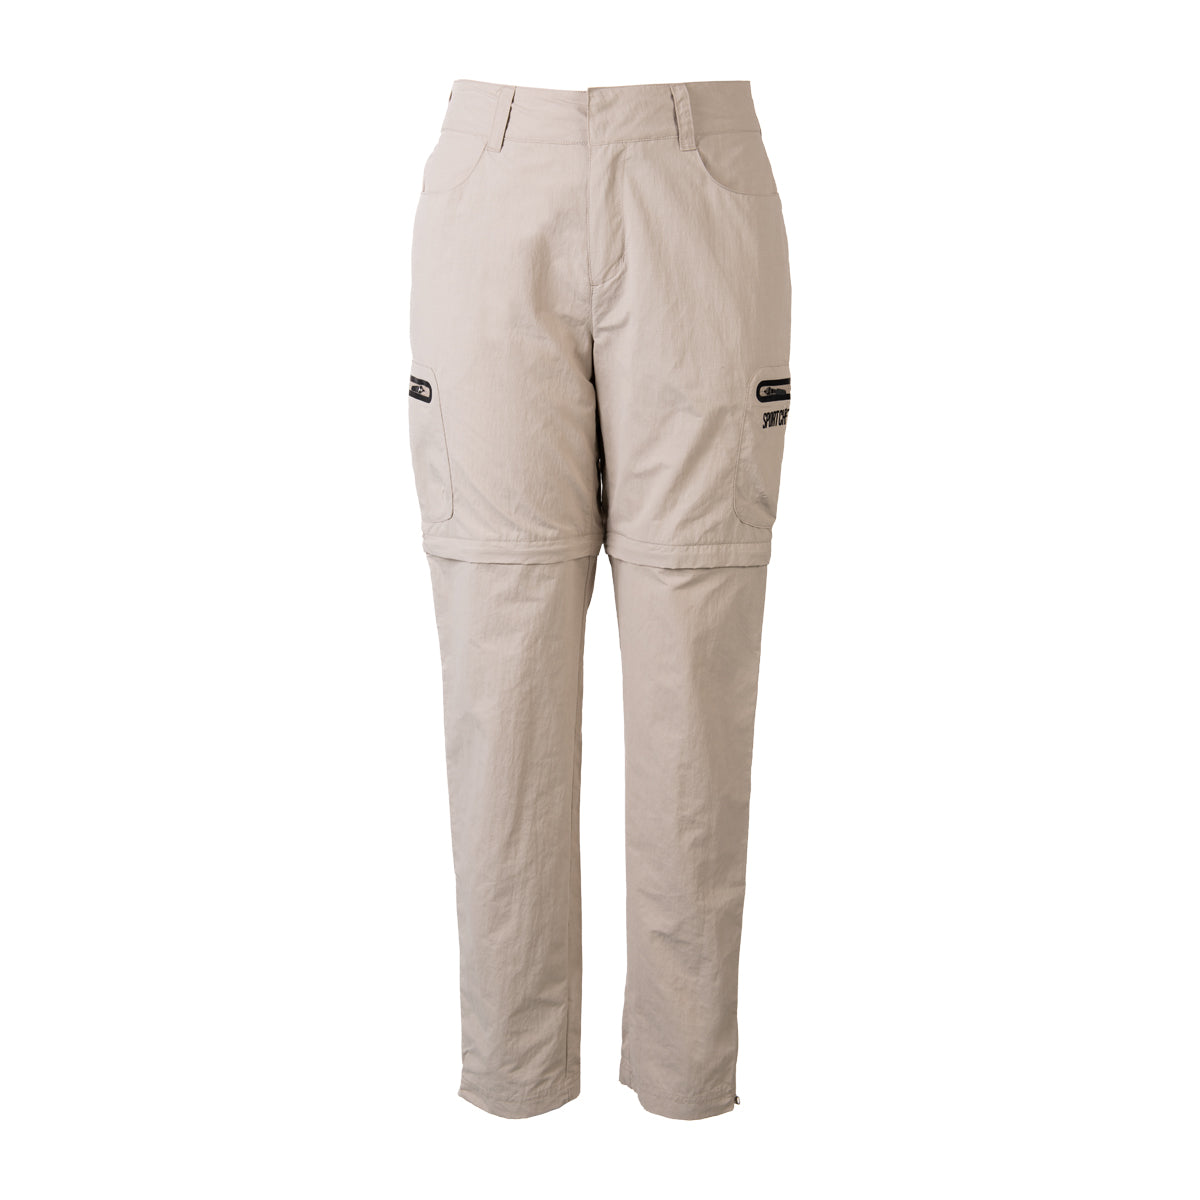 Women's pants "pilgrim" mosquito repellent, beige, for fishing or outdoors